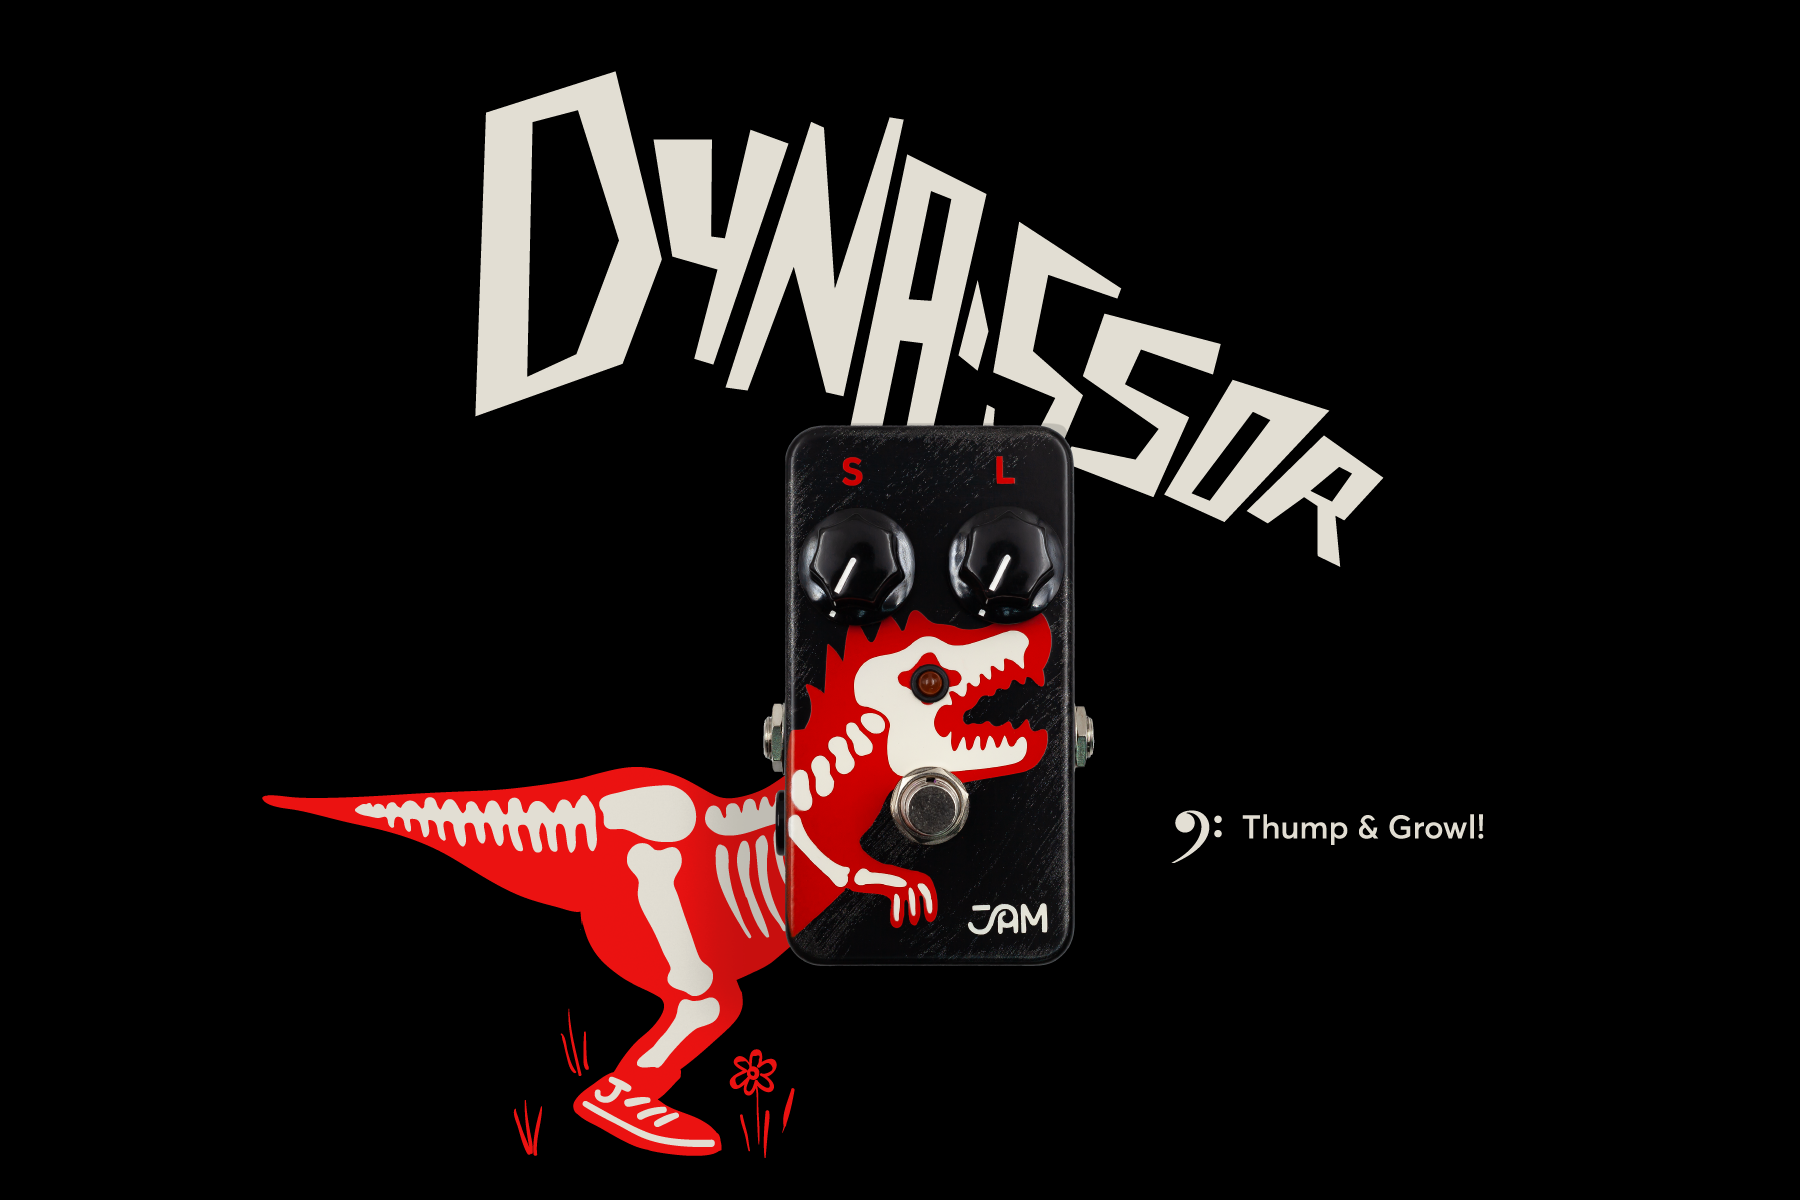 Dyna-ssoR Bass